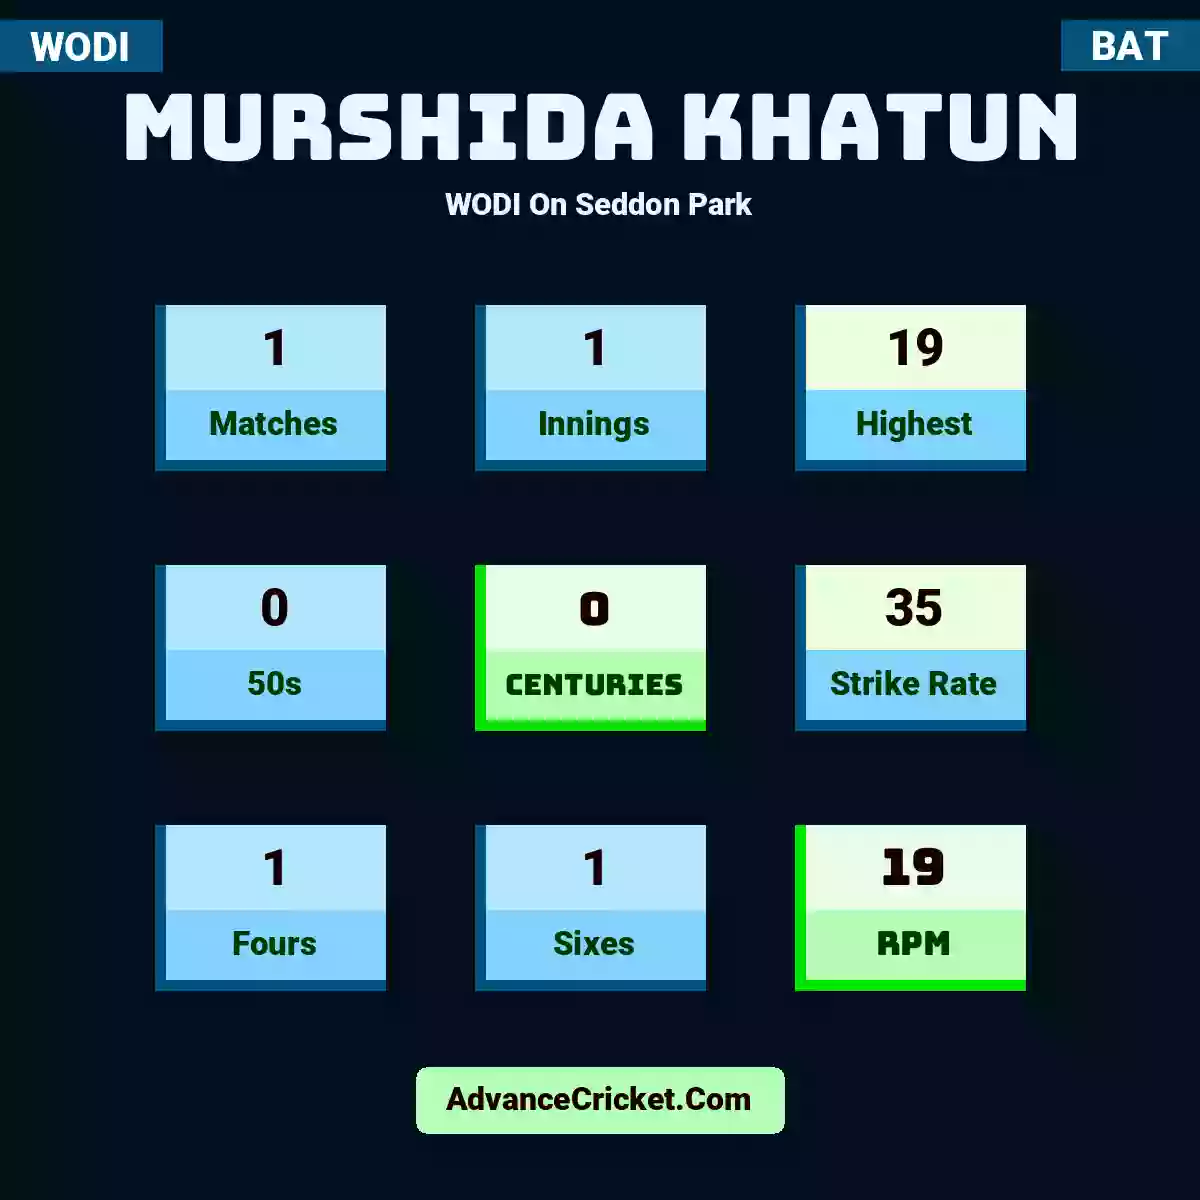 Murshida Khatun WODI  On Seddon Park, Murshida Khatun played 1 matches, scored 19 runs as highest, 0 half-centuries, and 0 centuries, with a strike rate of 35. M.Khatun hit 1 fours and 1 sixes, with an RPM of 19.